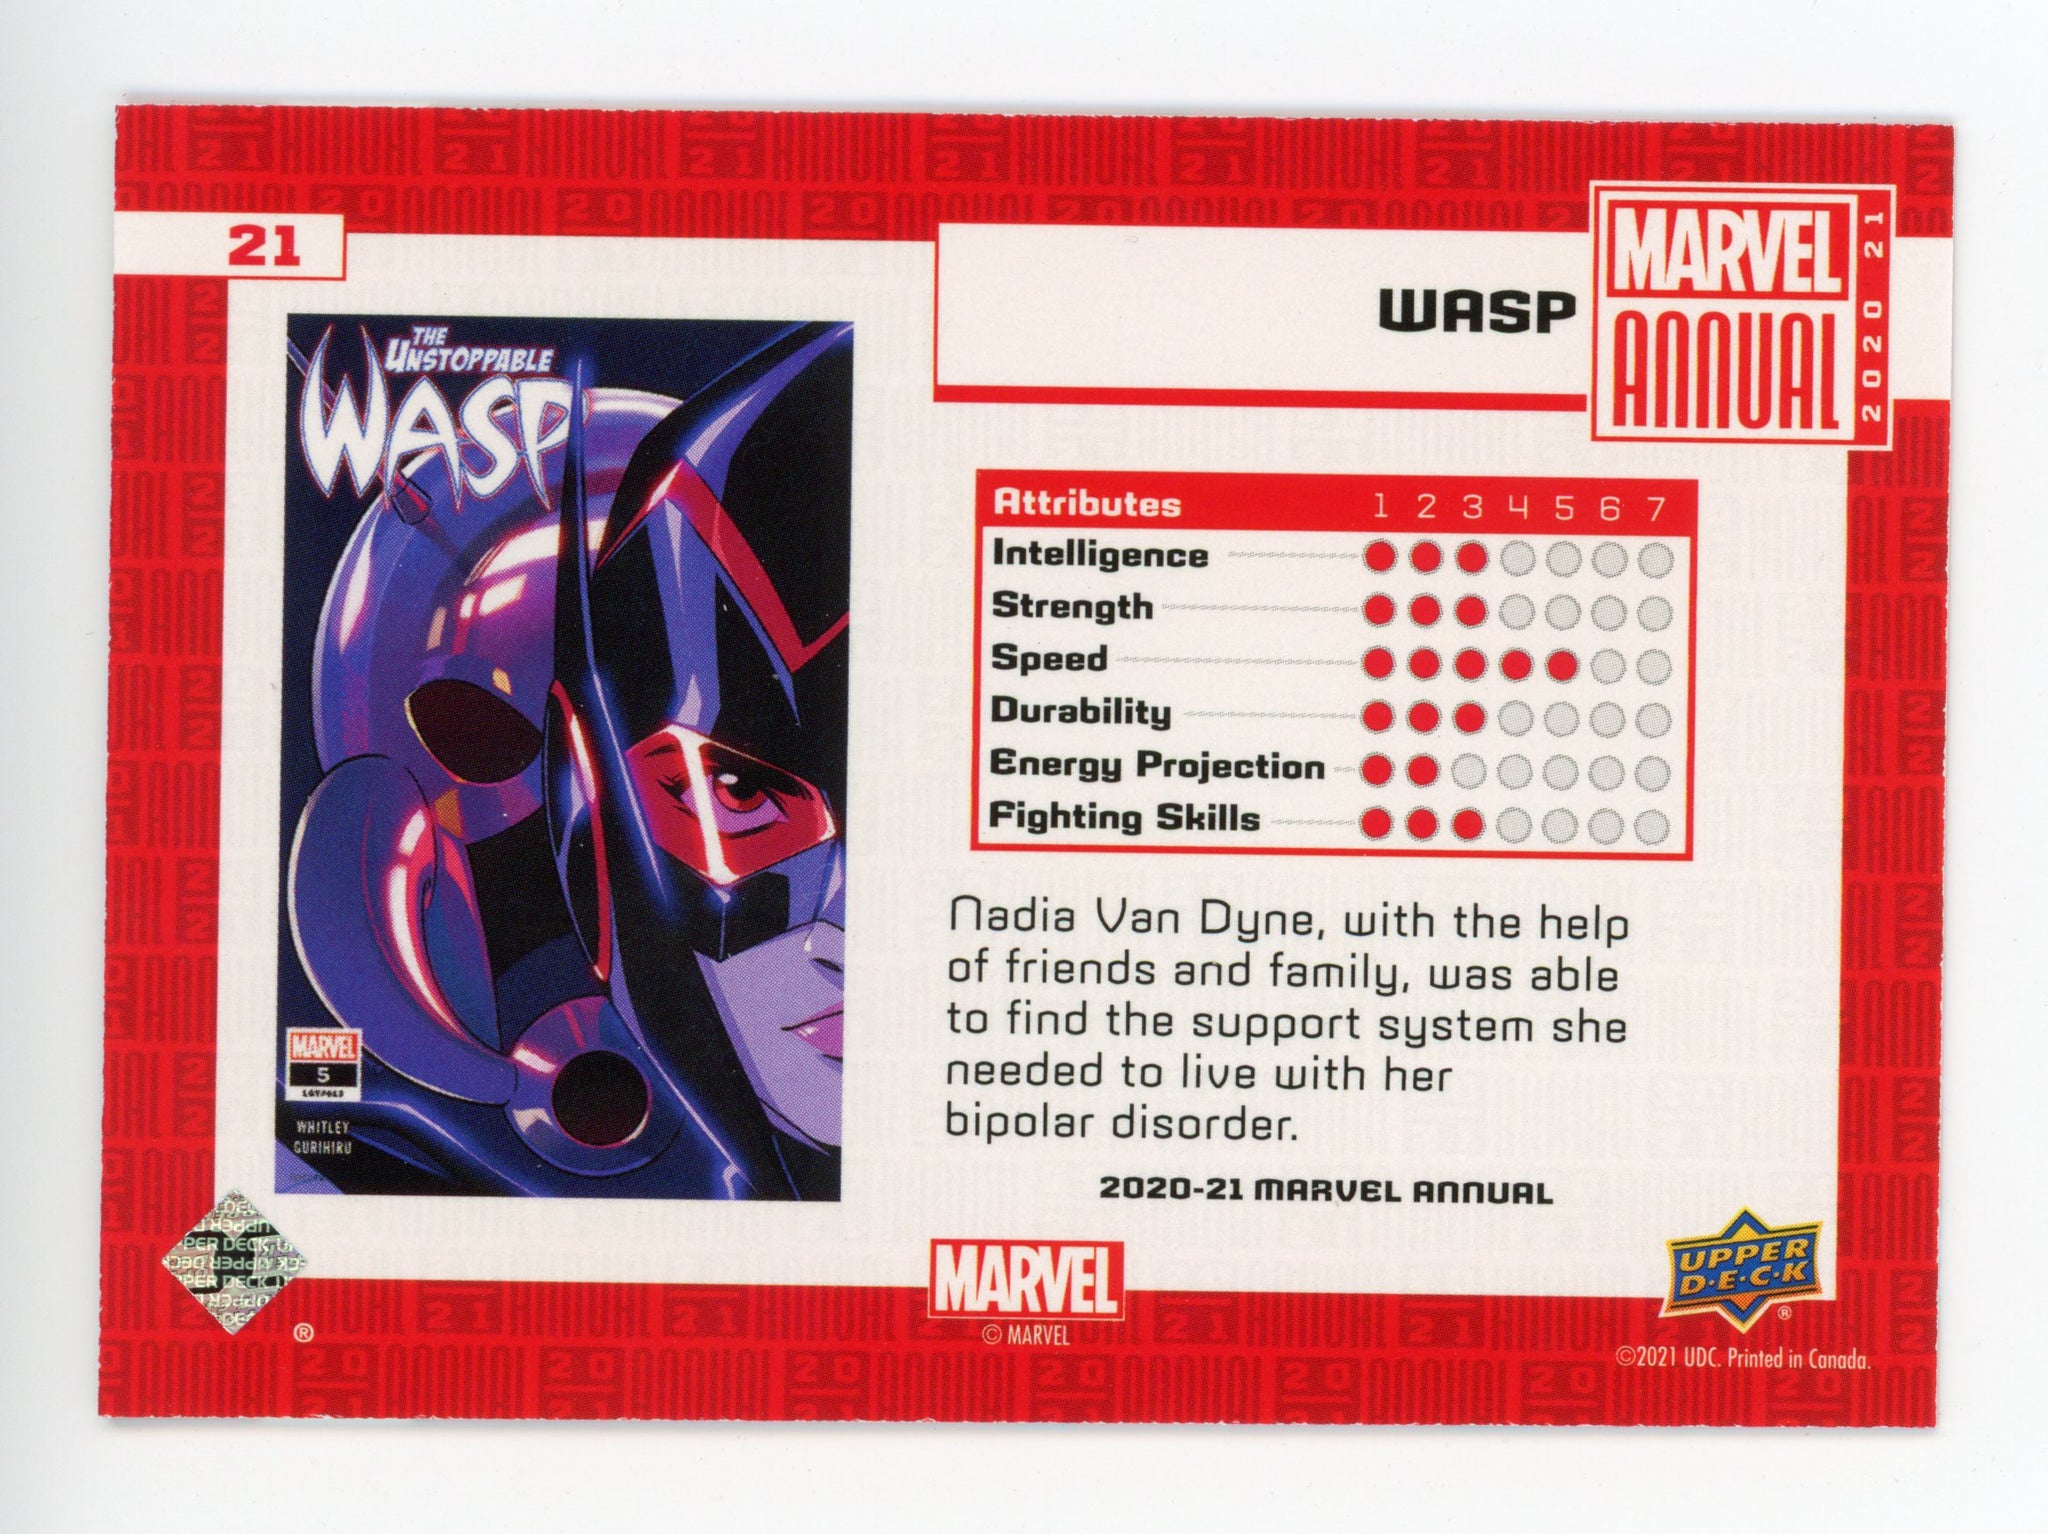 2020-2021 Wasp Variant Tier 2 Upper Deck Marvel Annual # 21